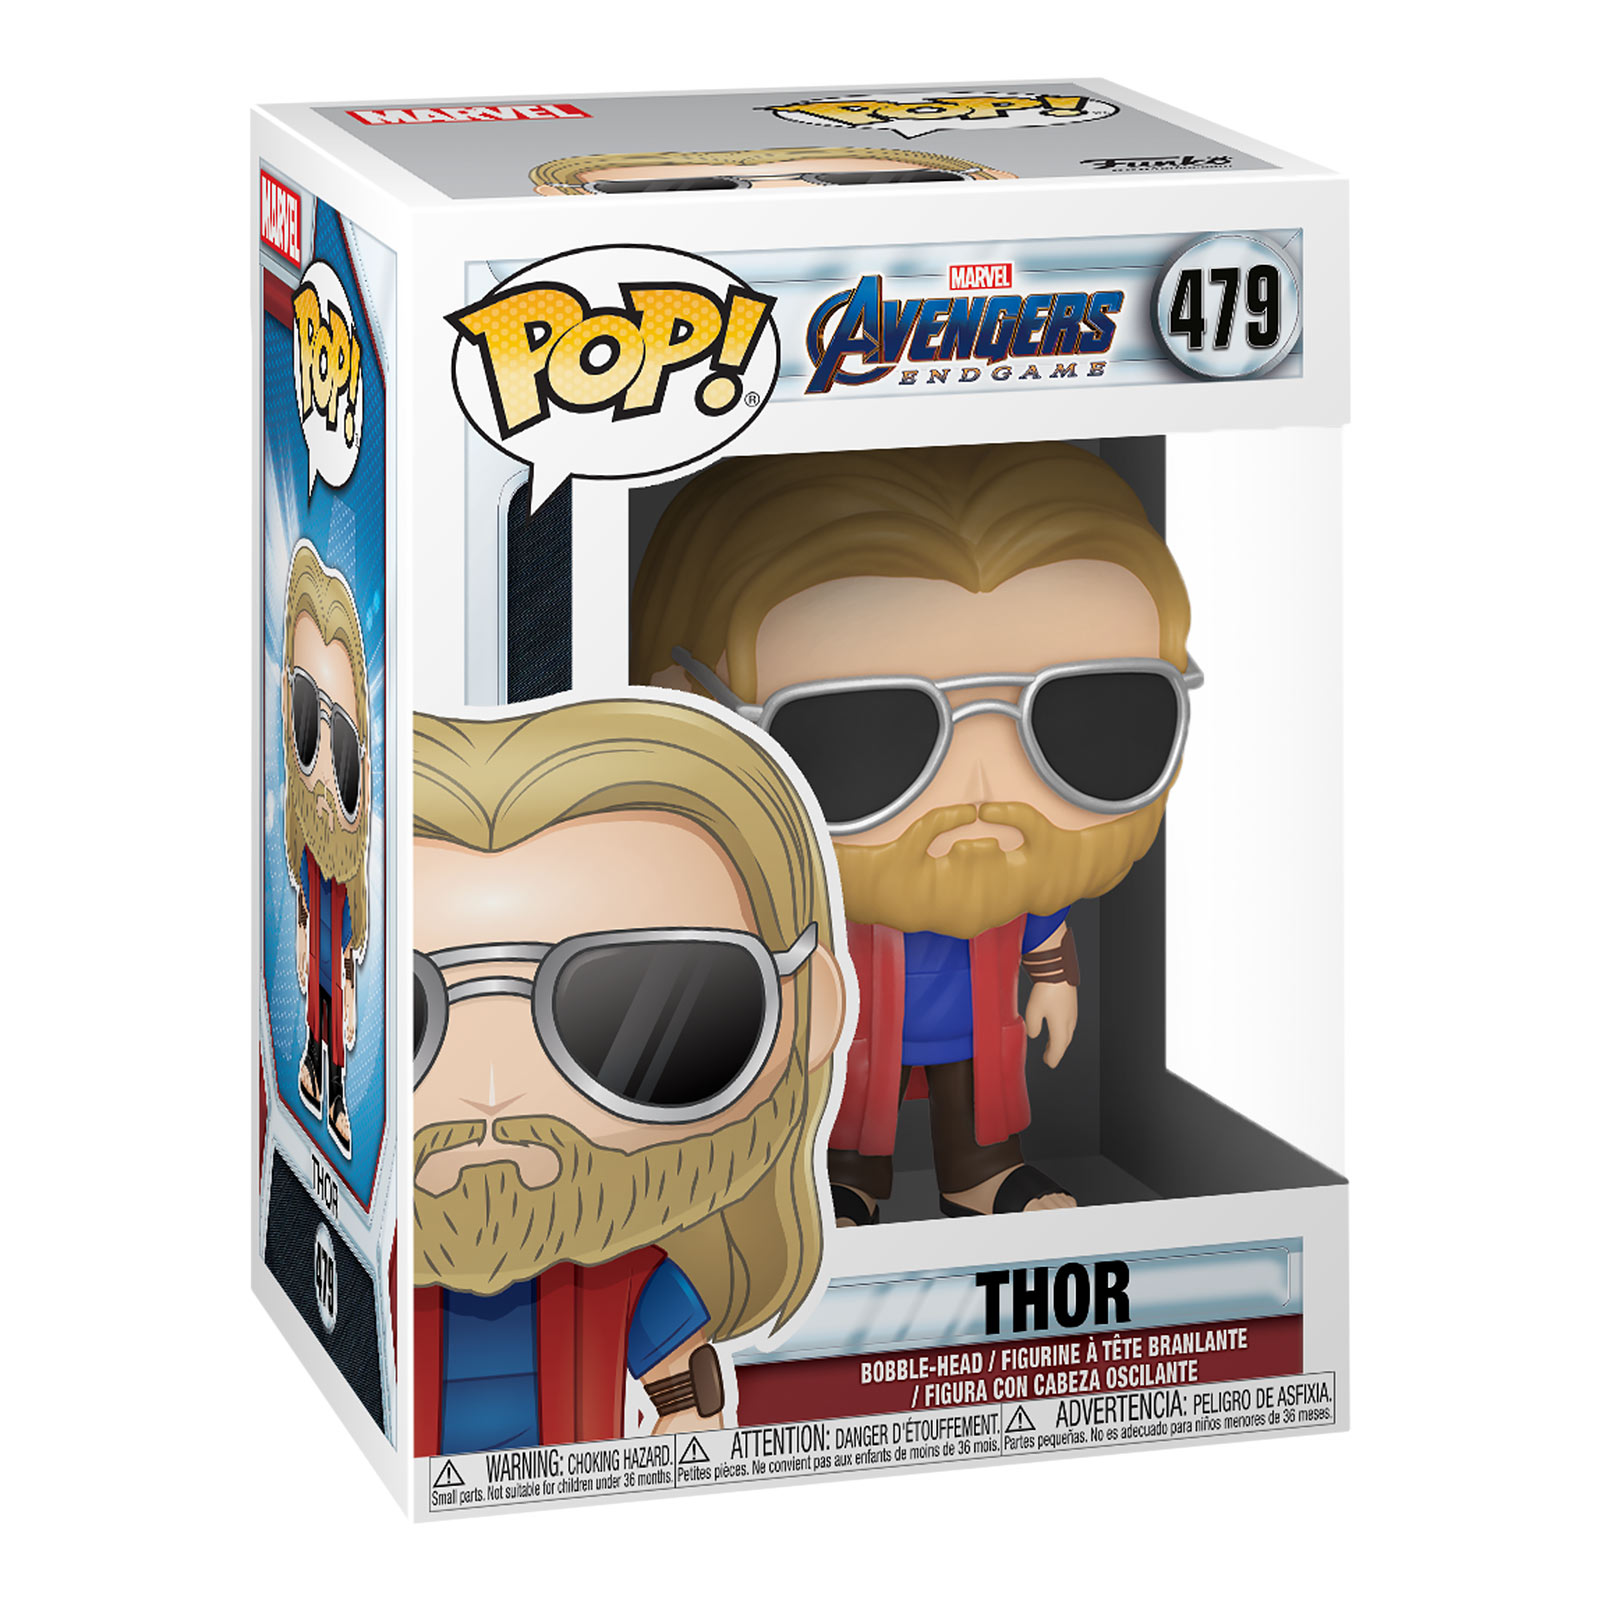 Avengers - Thor with Sunglasses Endgame Funko Pop bobblehead figure